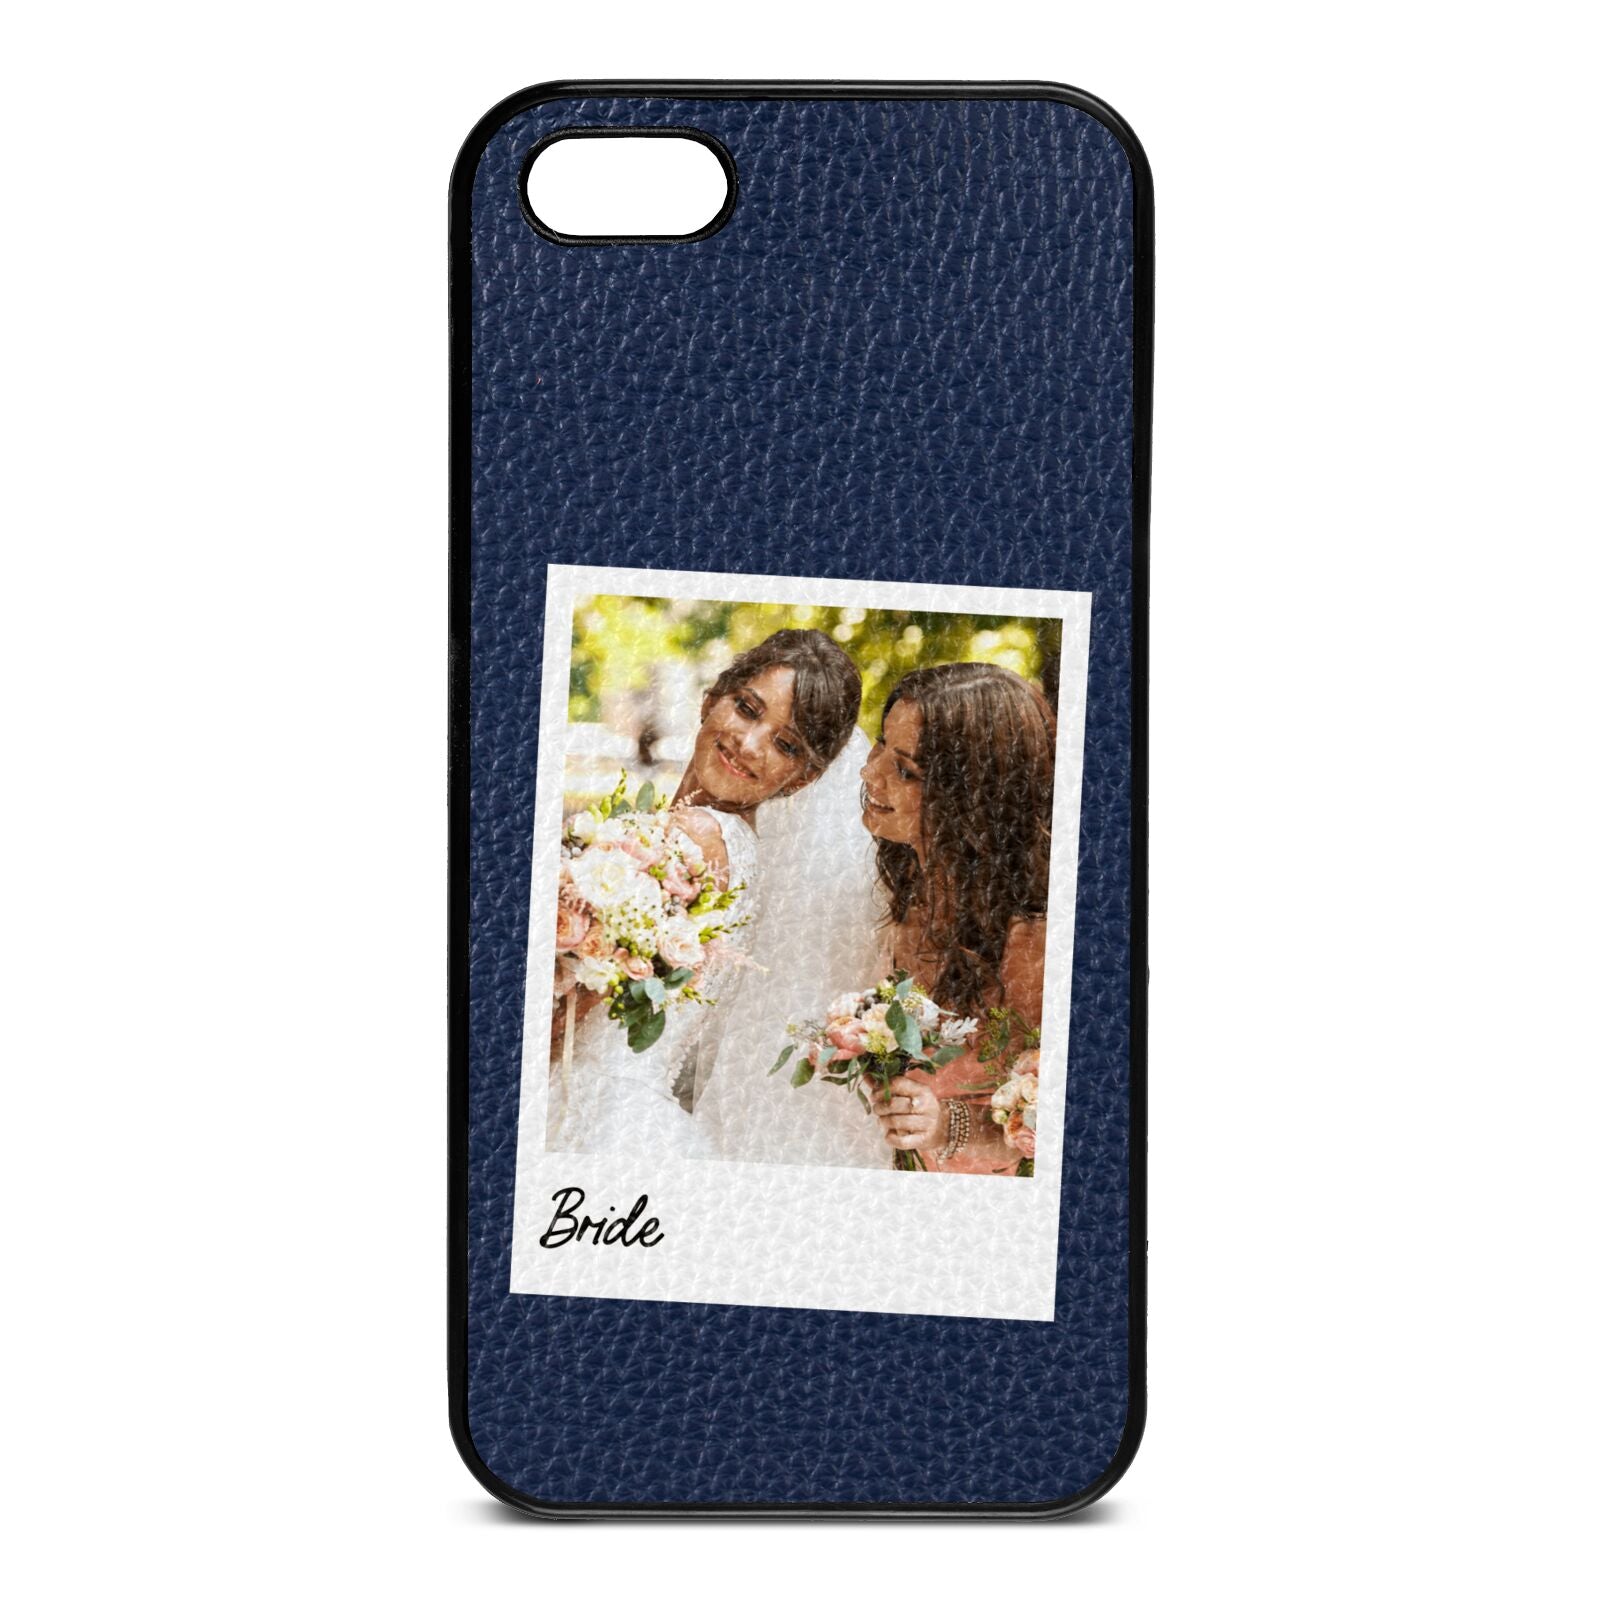 Bridal Photo Navy Blue Pebble Leather iPhone 5 Case